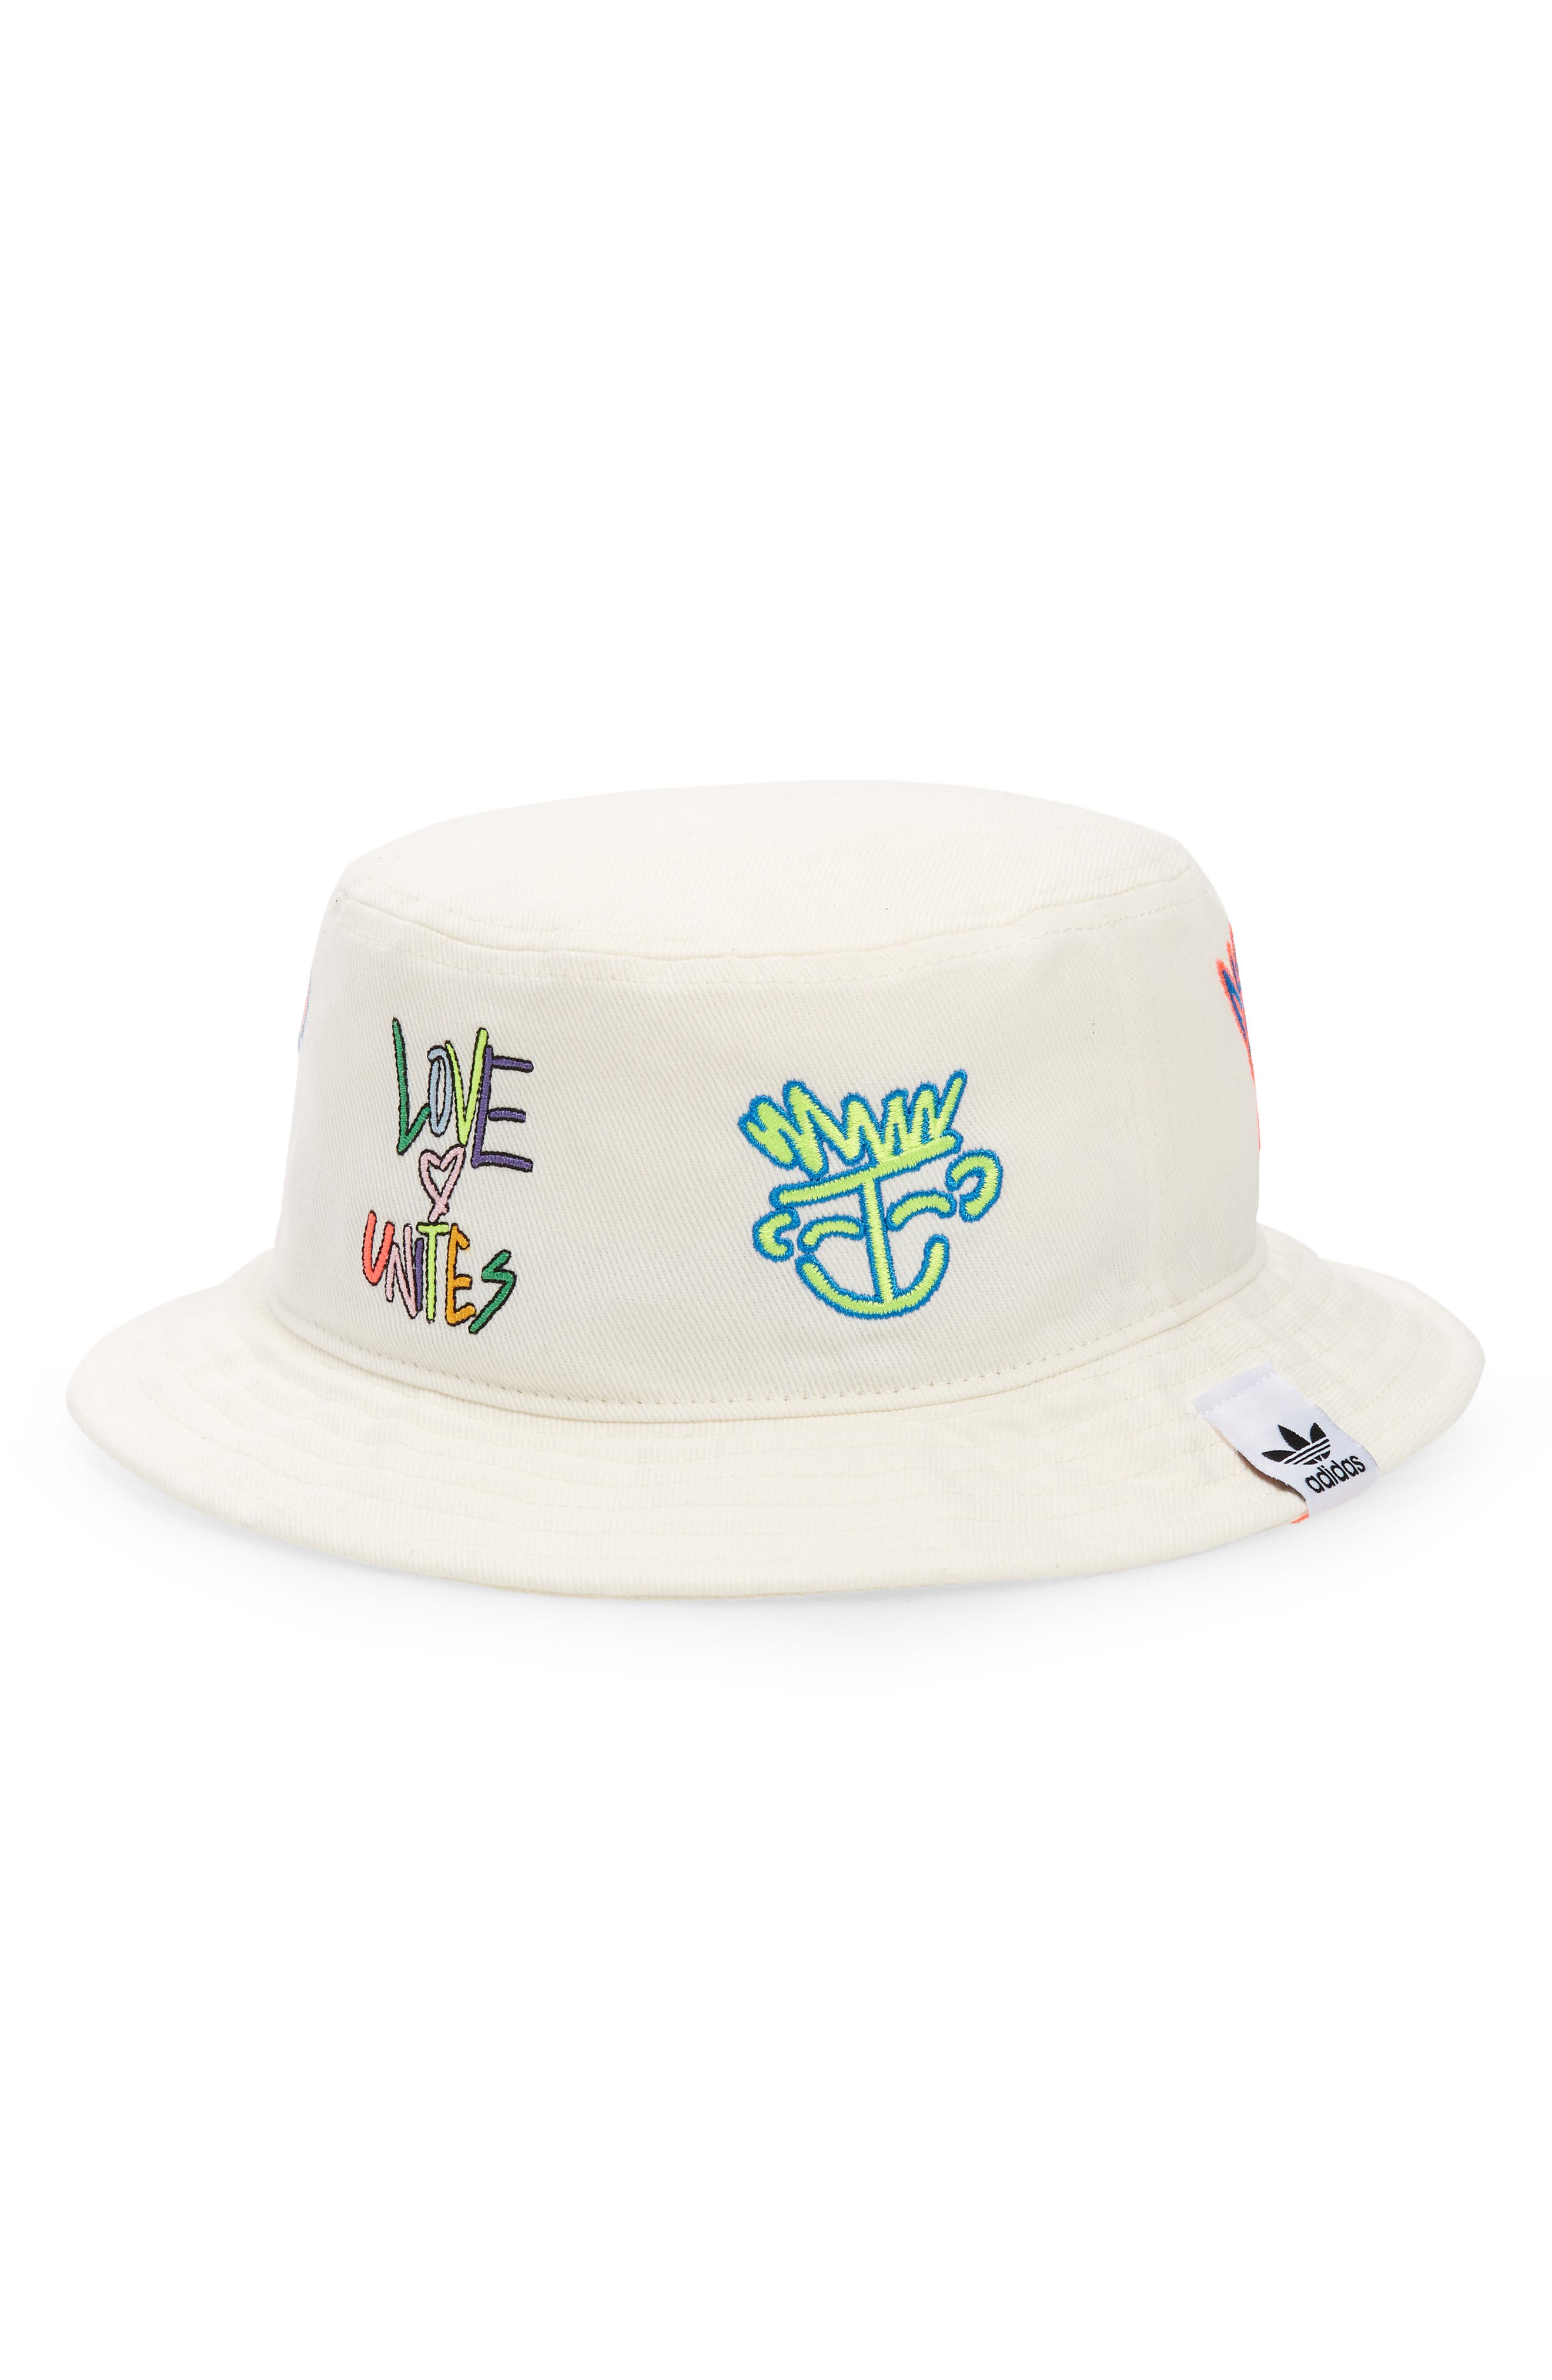 Morning Snapback Cotton Caps Flat Hats Casual Professional Cap